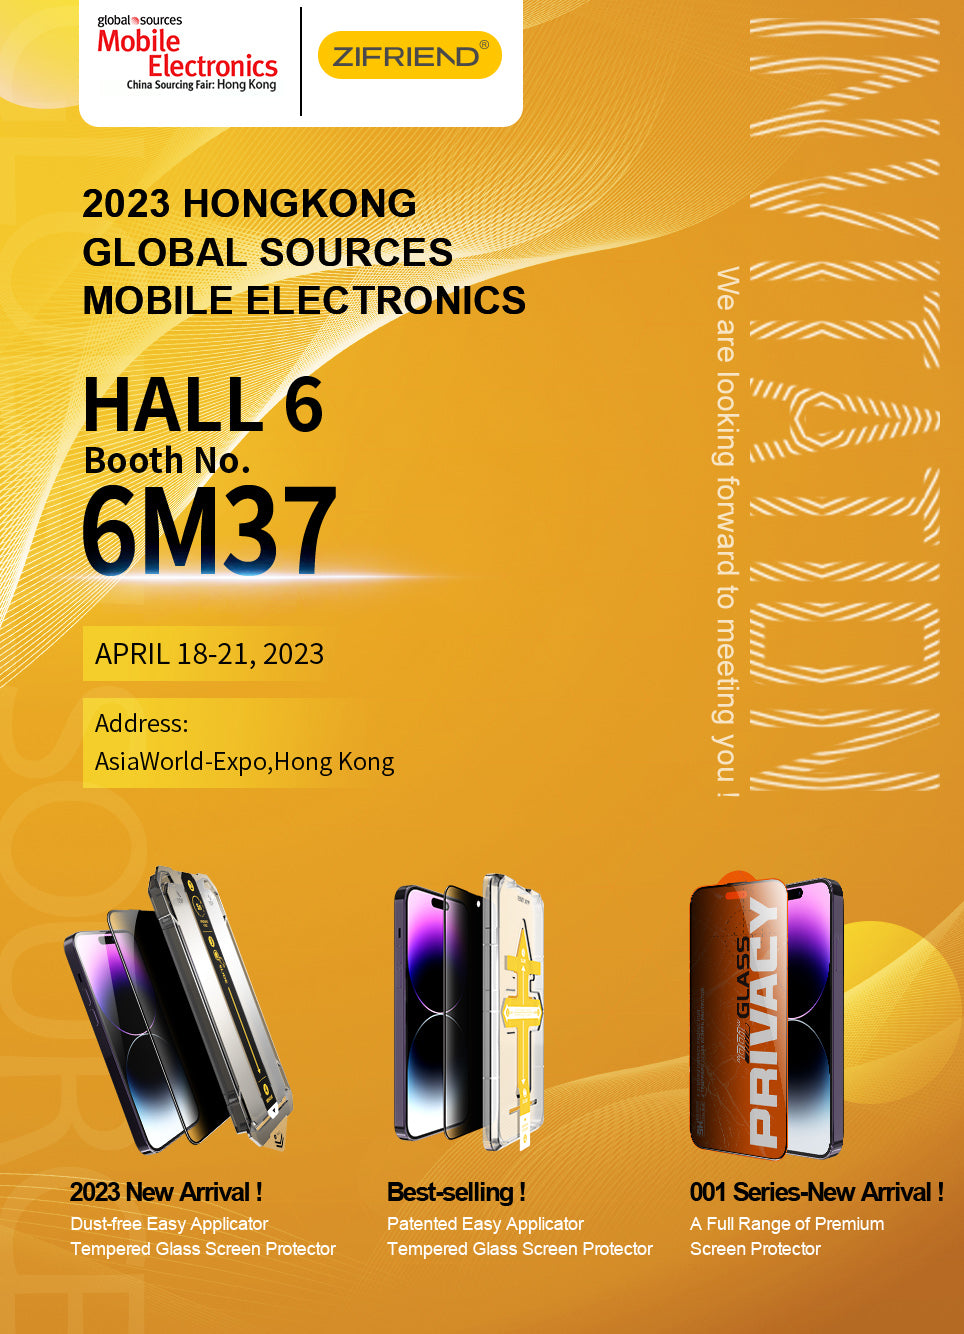 Zifriend 2023 HONGKONG GLOBAL SOURCES MOBILE ELECTRONICS